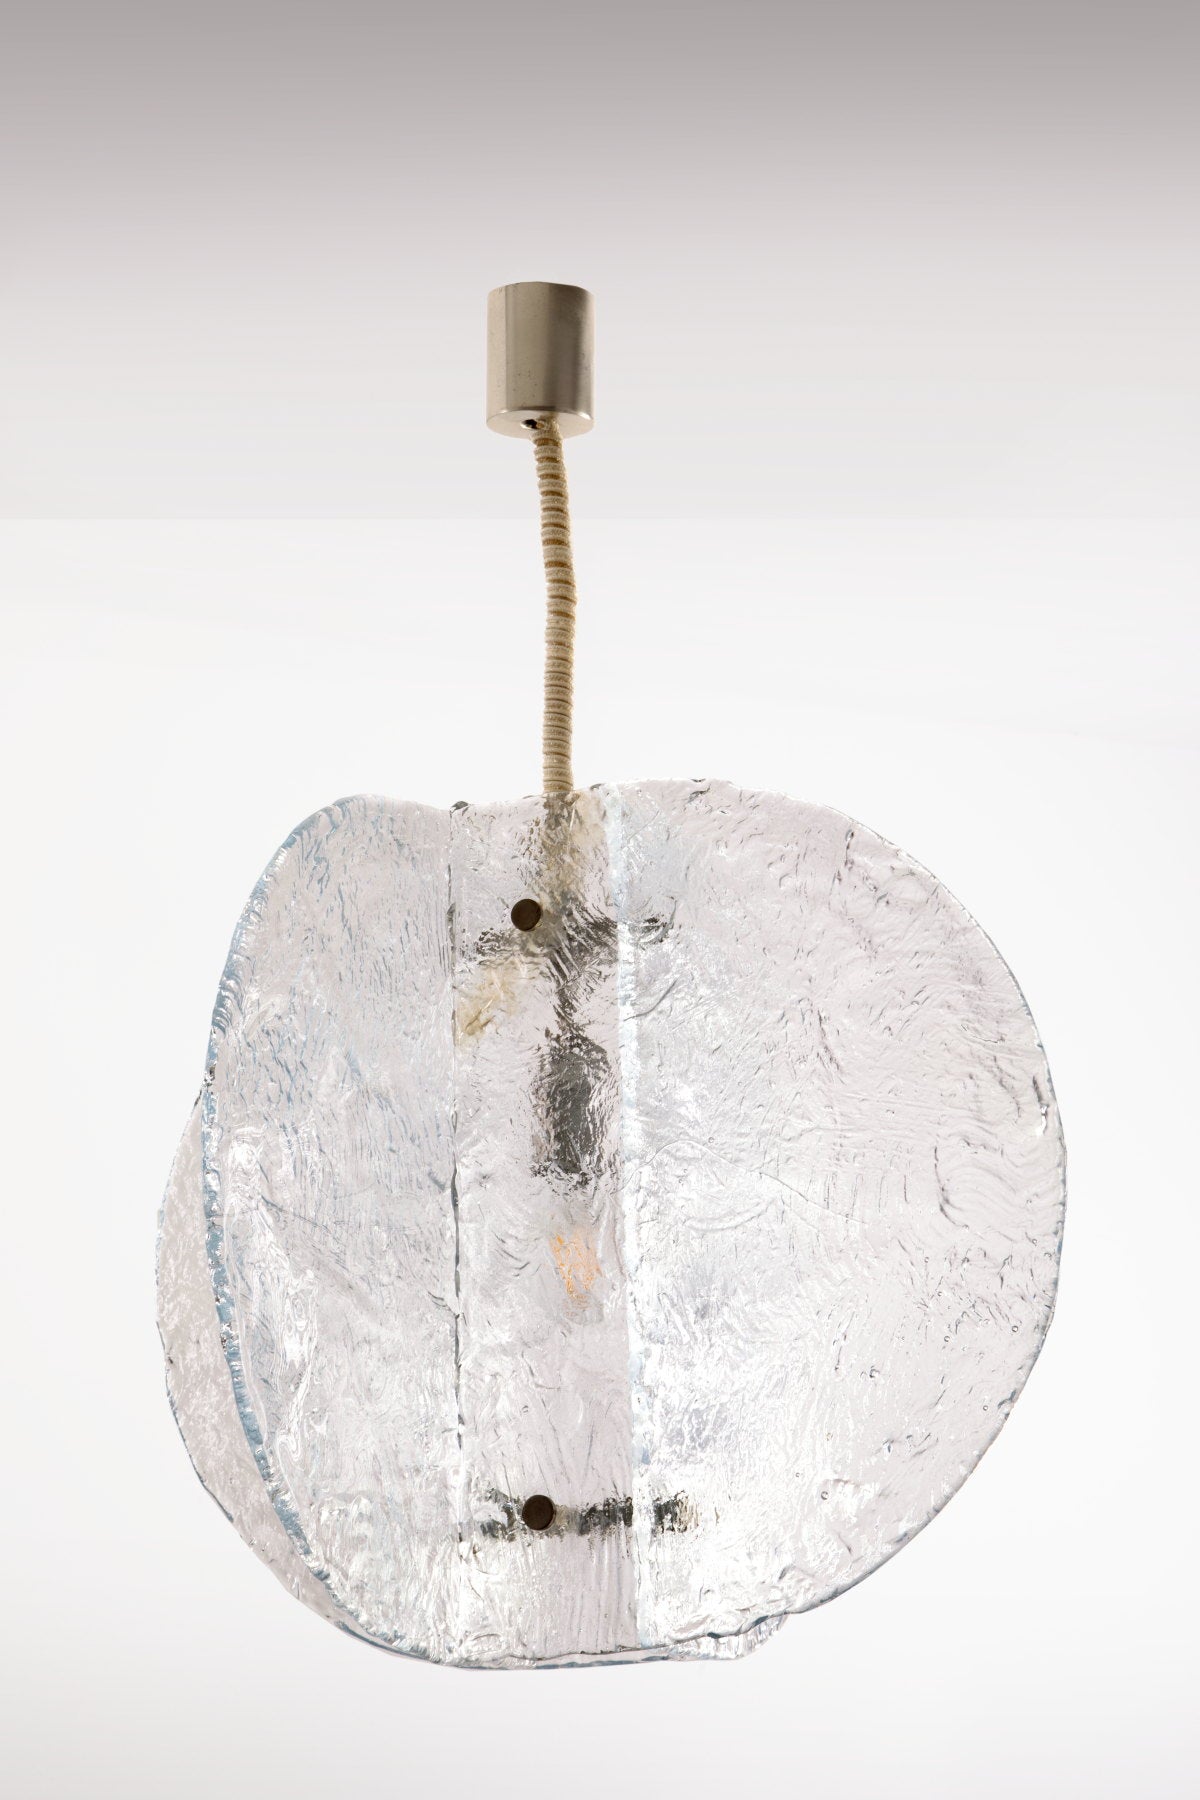 Carlo Nason frozen glass chandelier for Mazzega